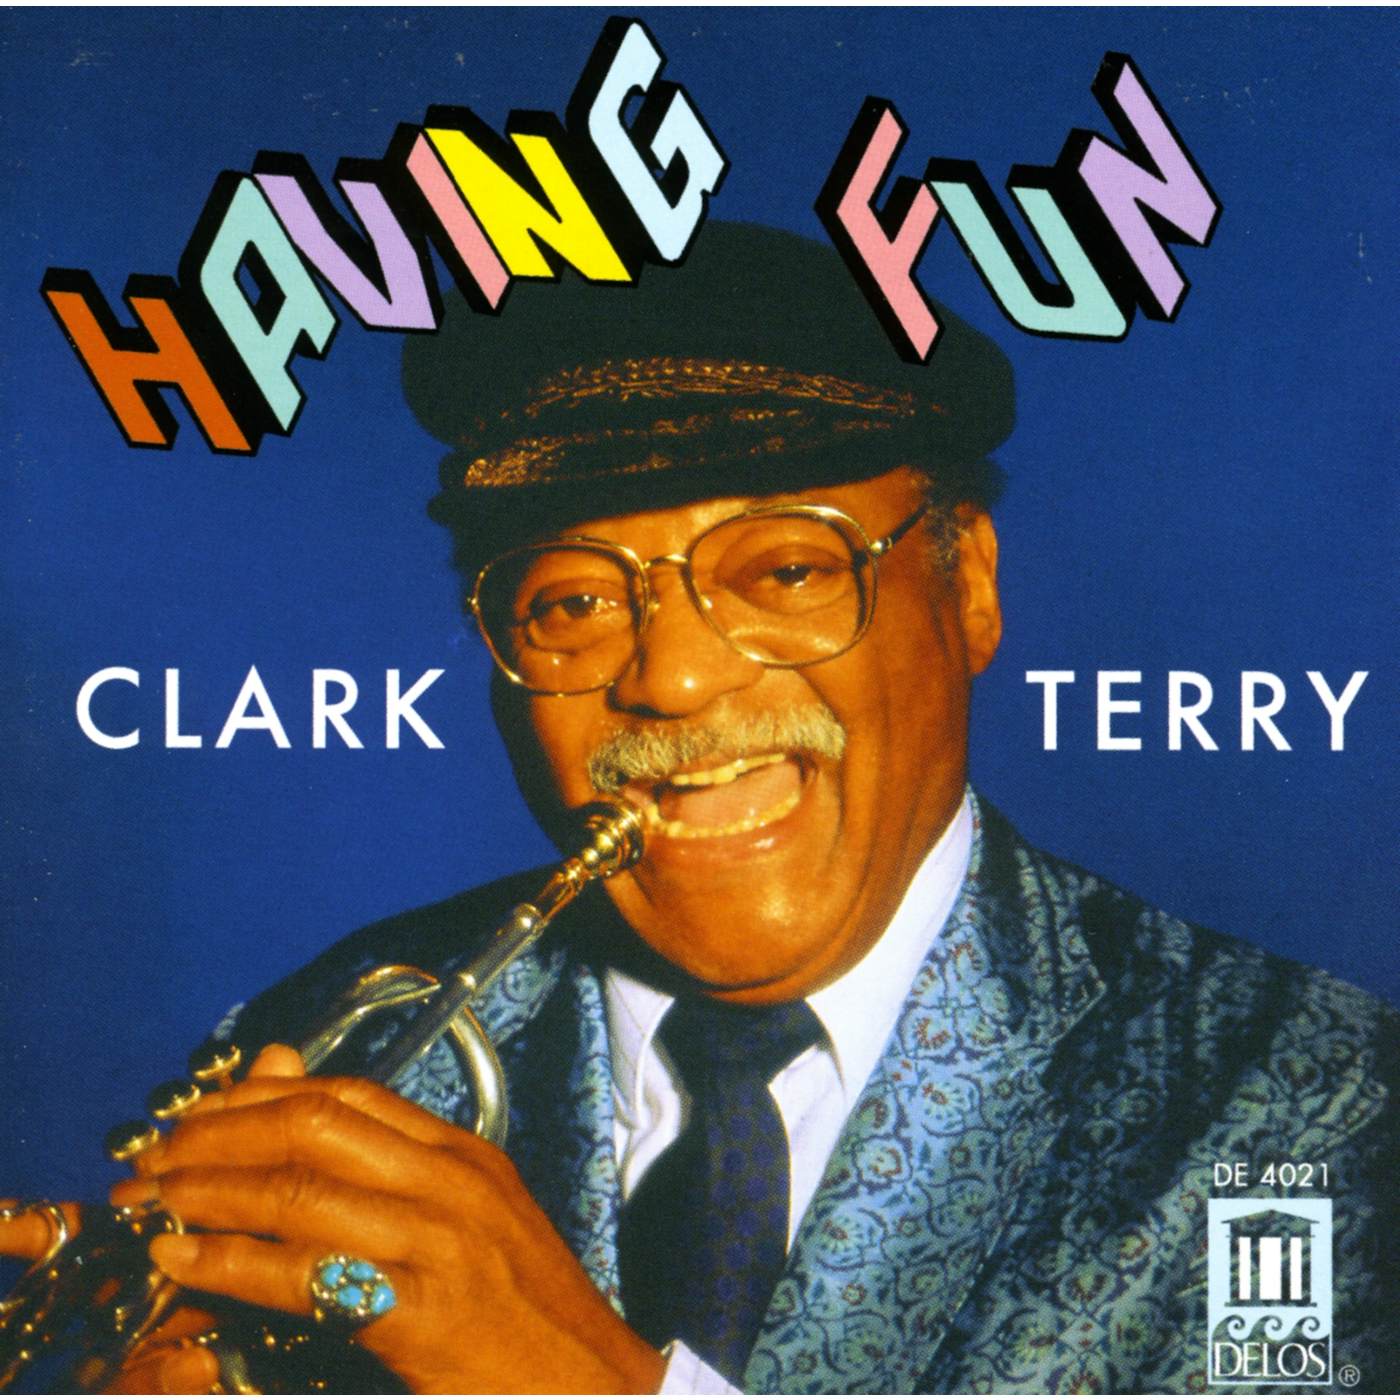 Clark Terry HAVING FUN CD